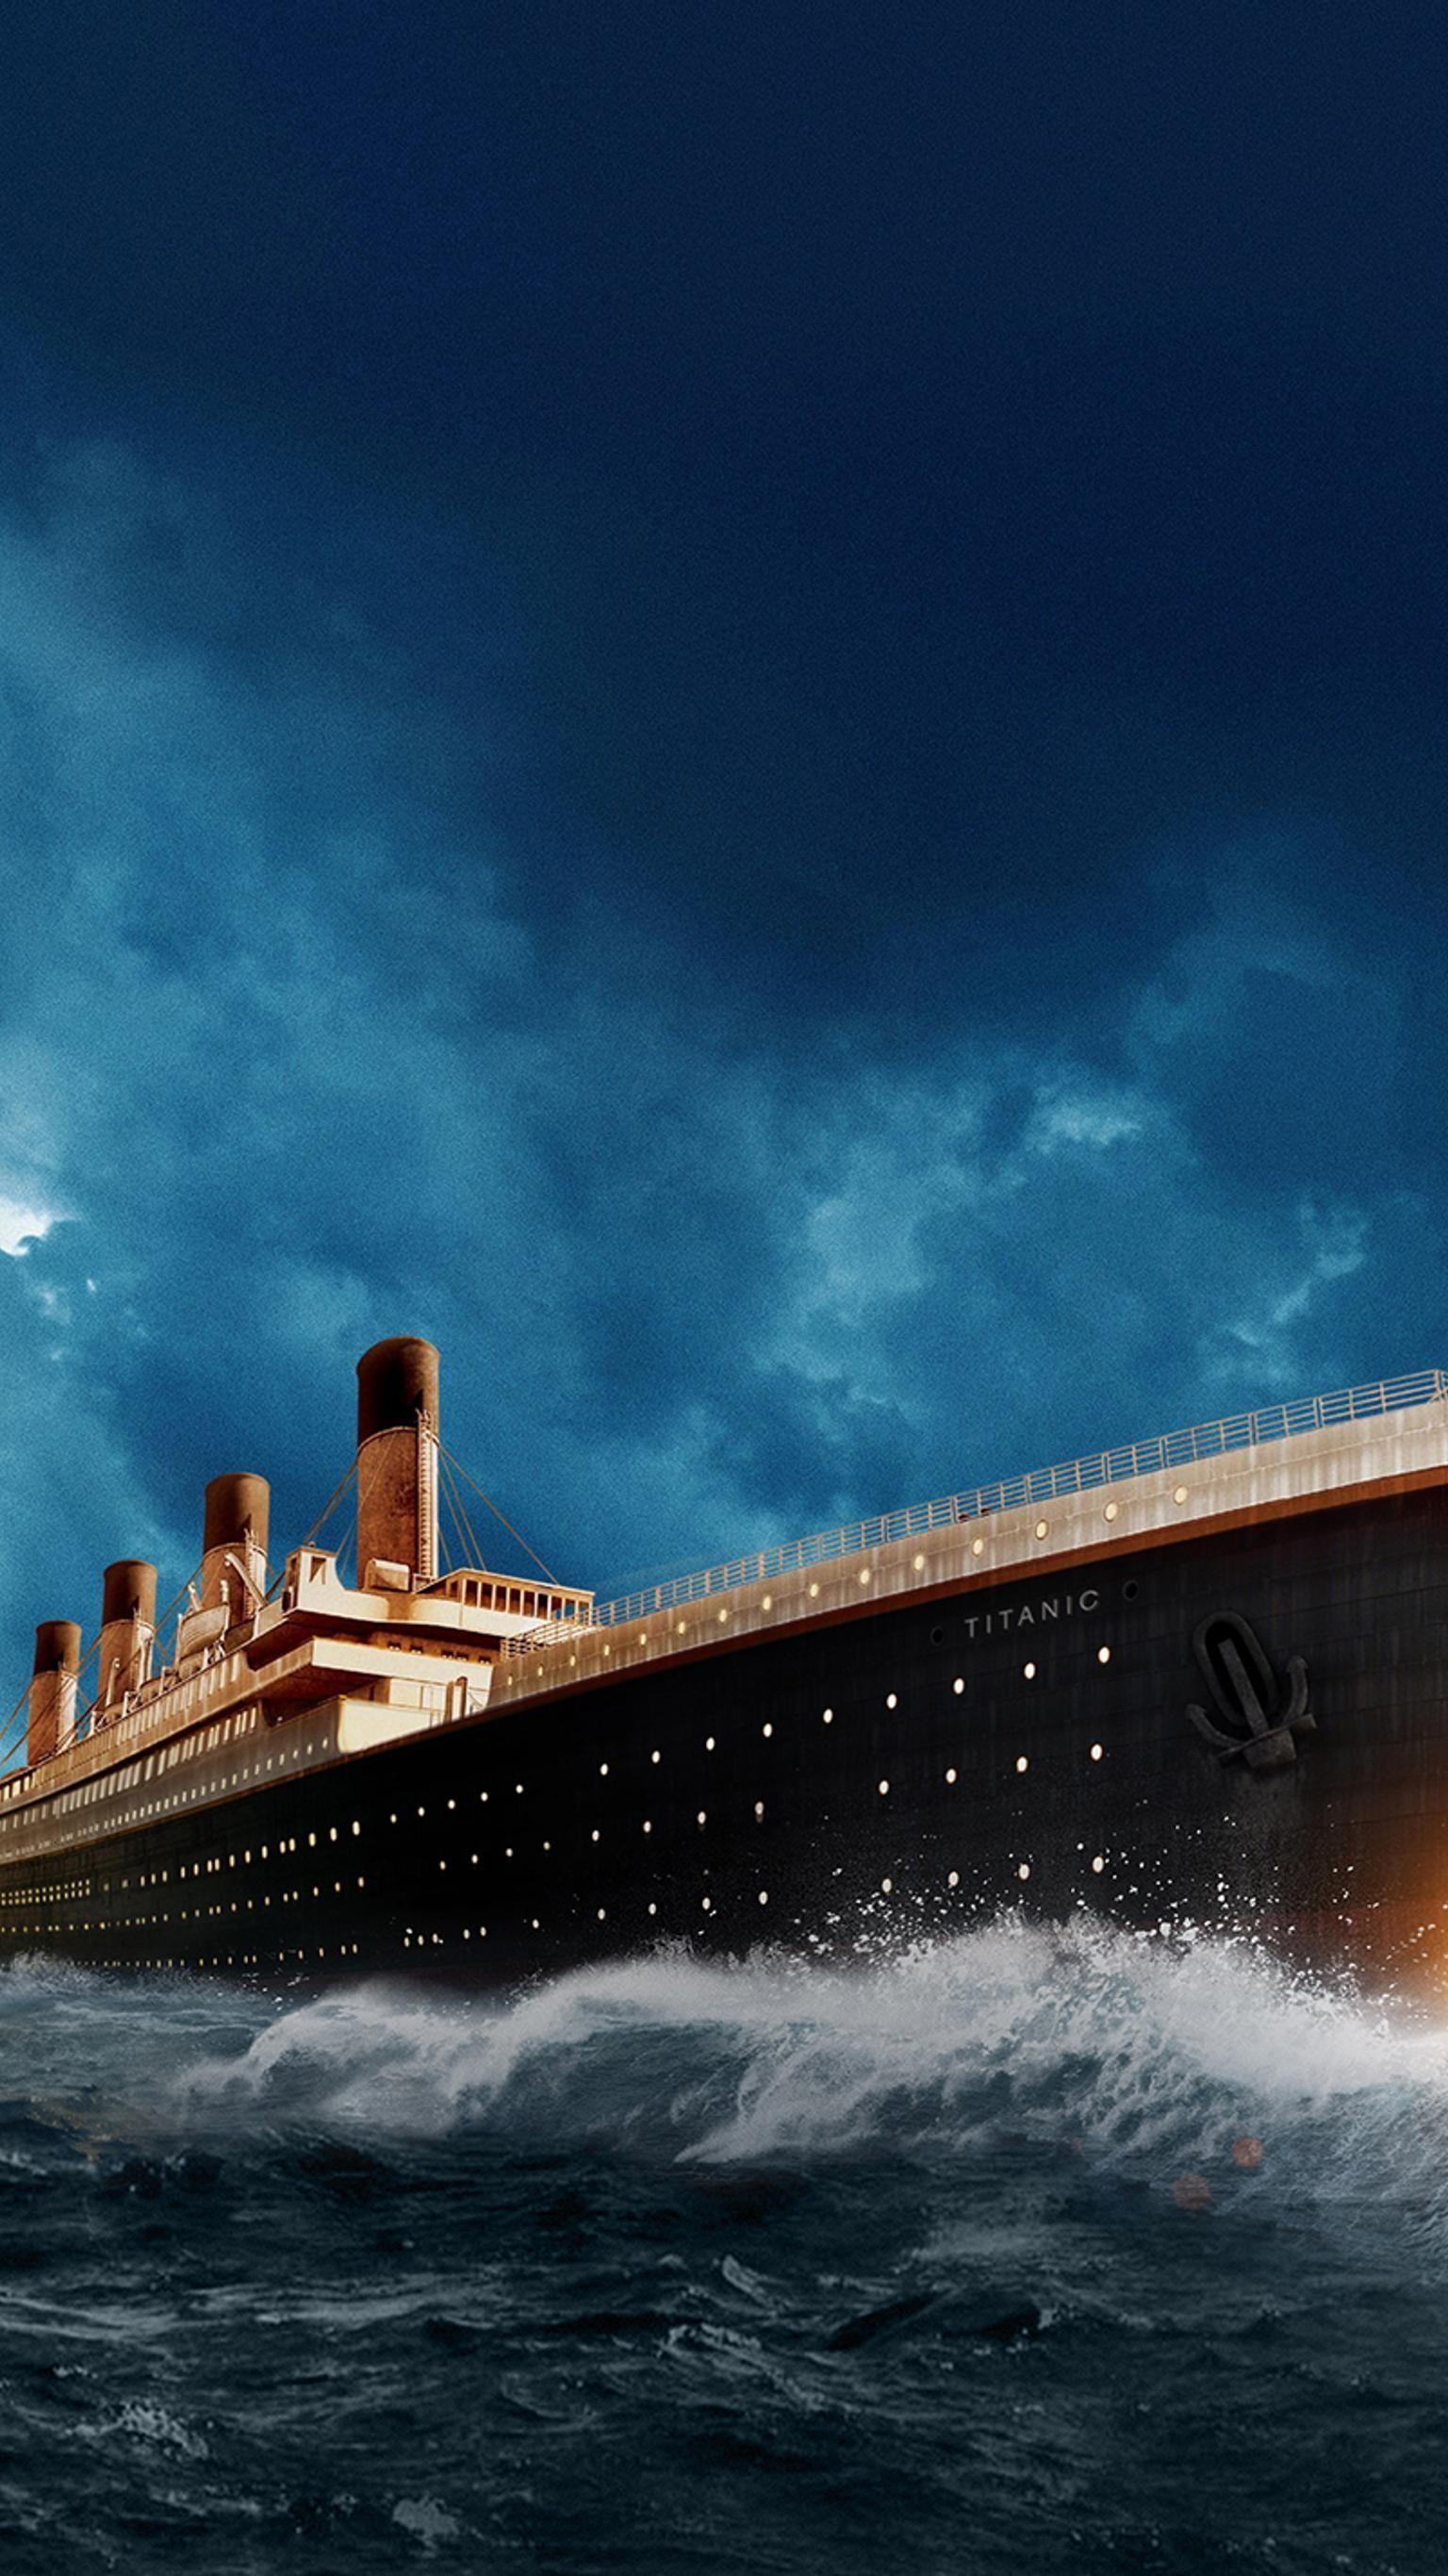 Titanic Ship Wallpapers - Top Free Titanic Ship Backgrounds